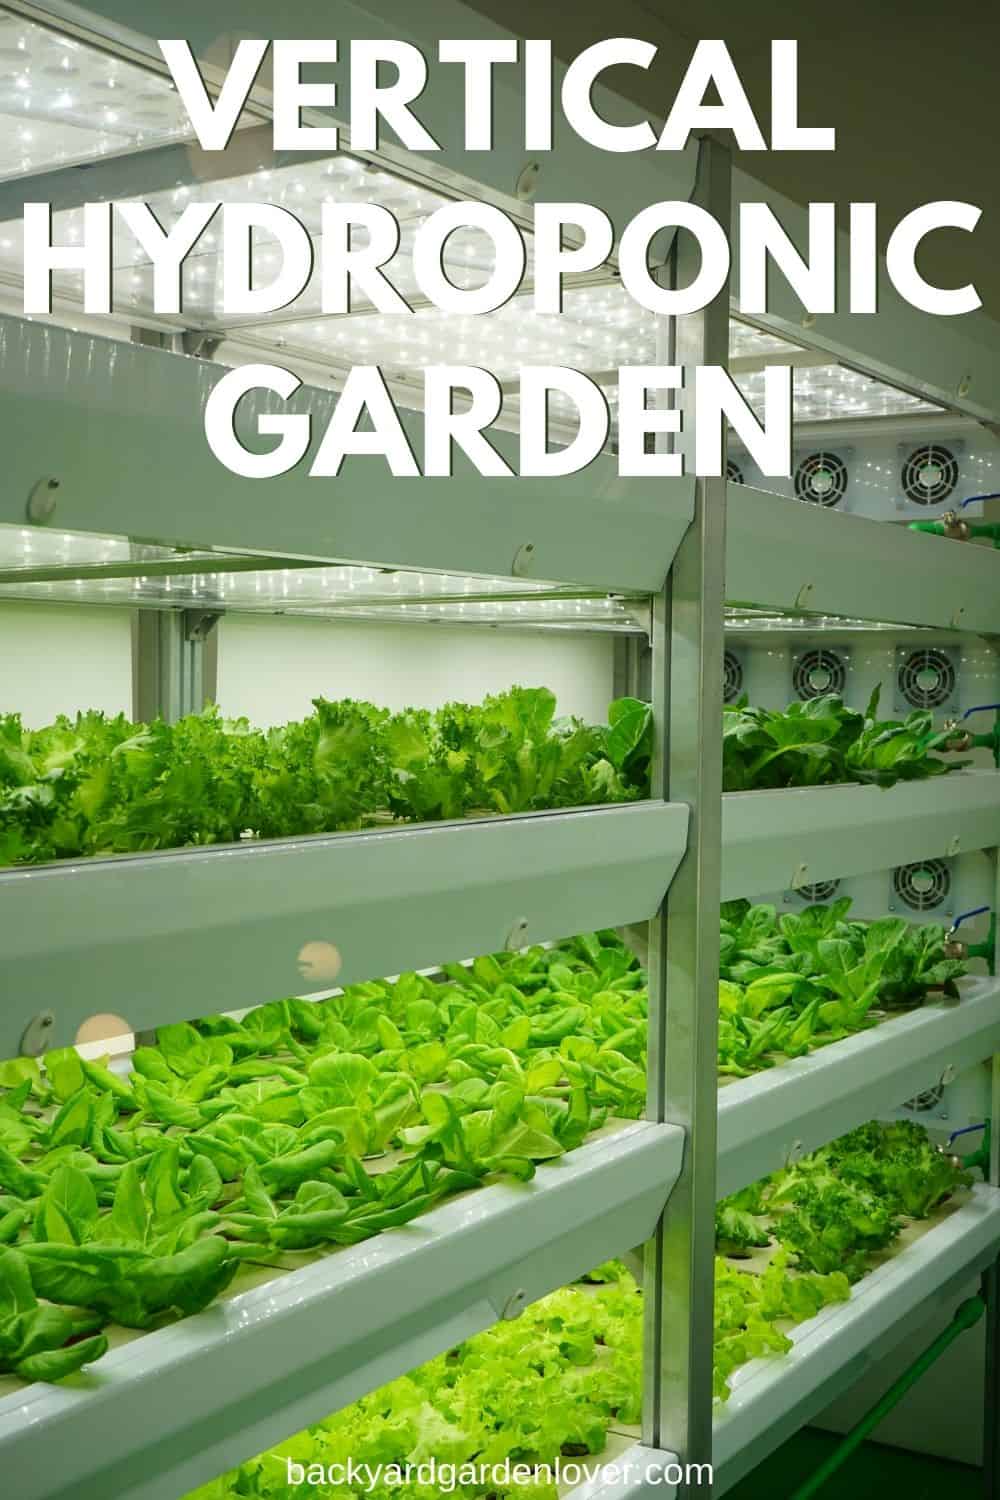 Vertical hydroponic gardening - Pinterest image